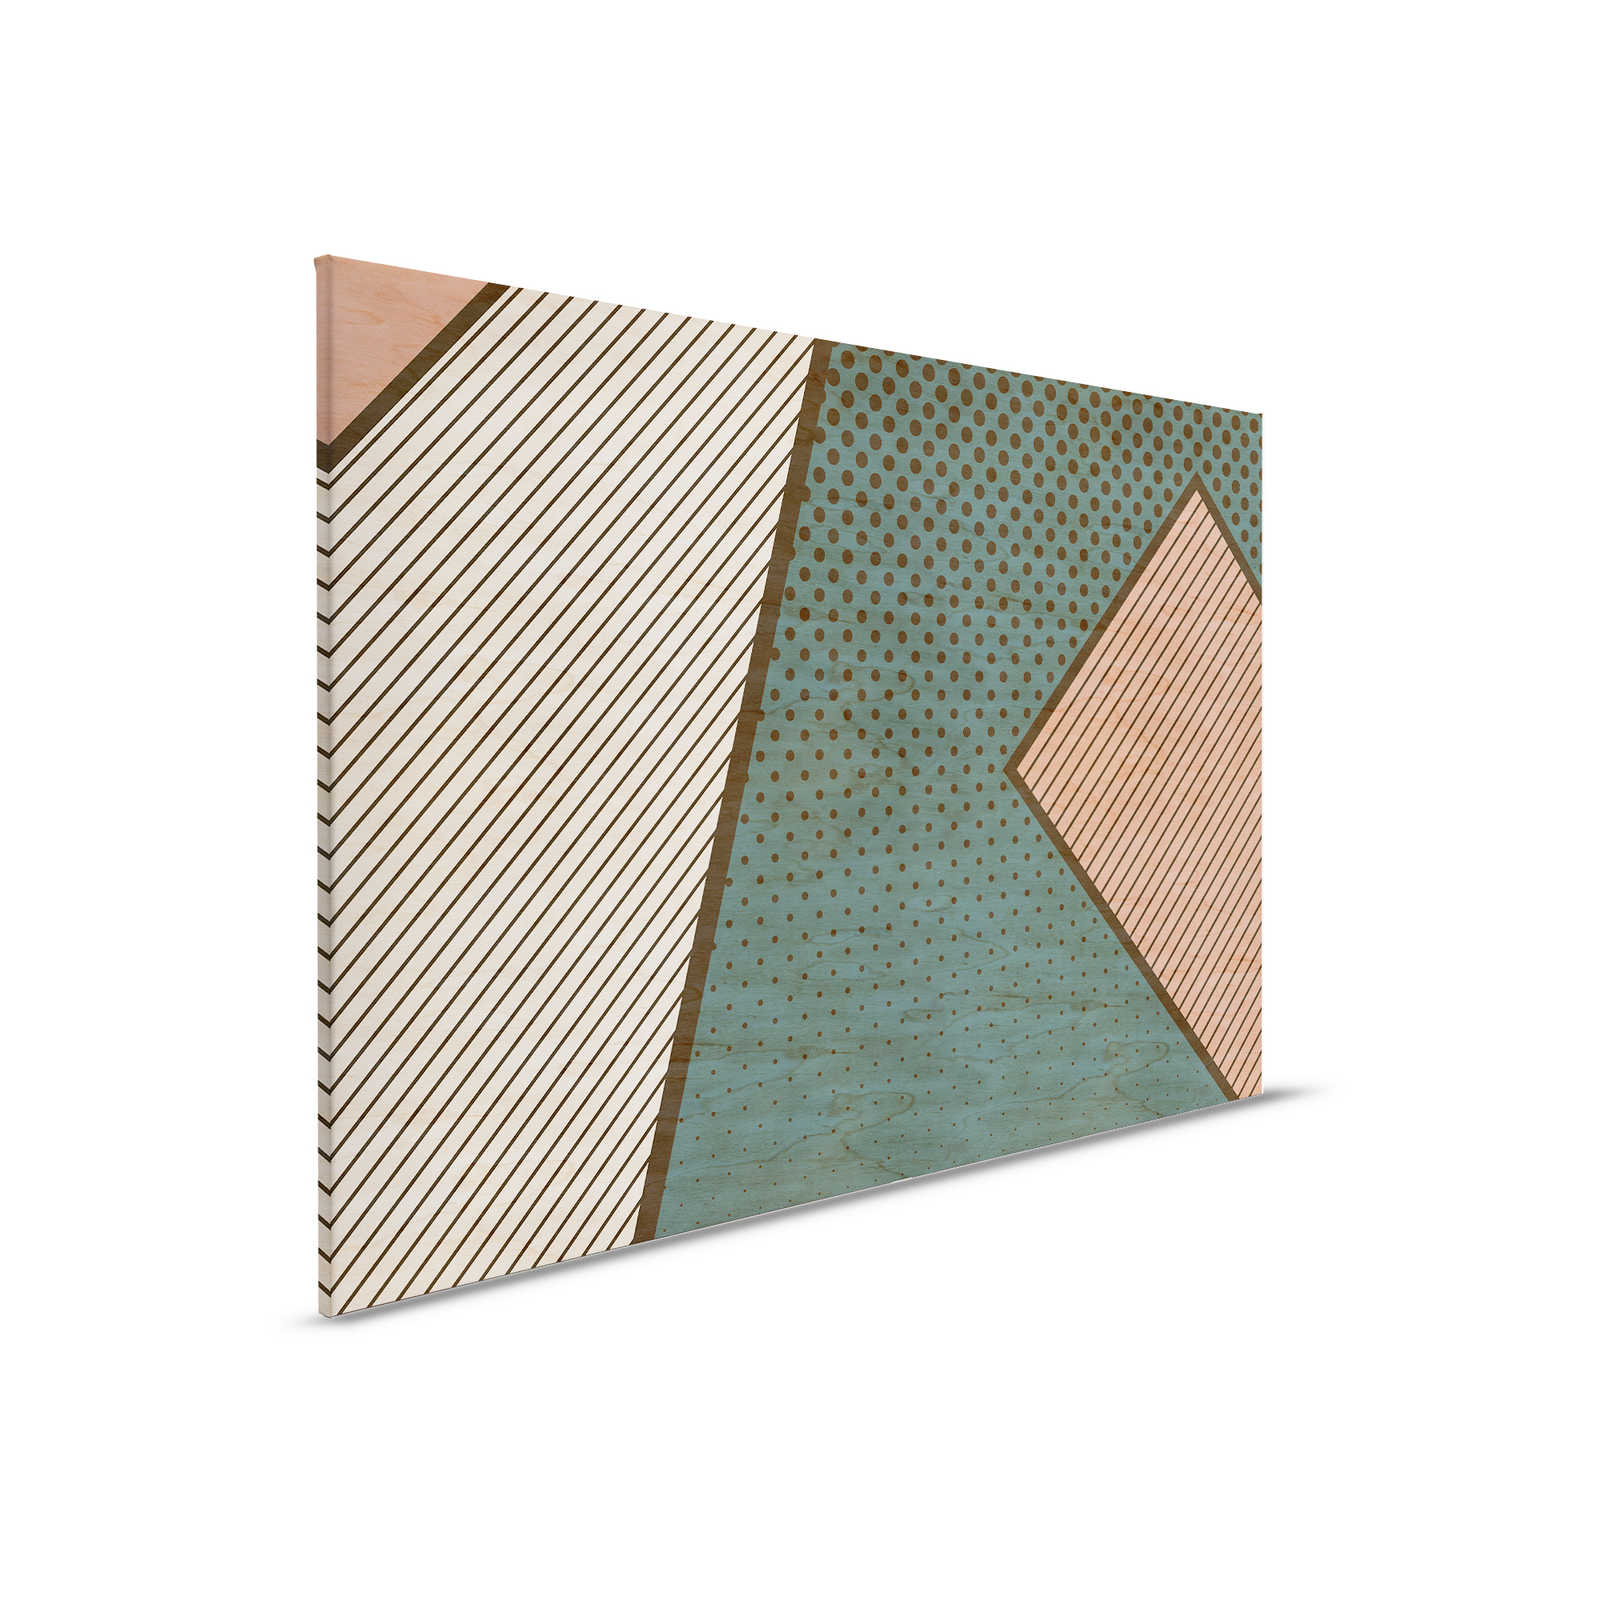         Bird gang 1 - gemustertes Leinwandbild, Sperrholz Struktur mit modernes Farbflächen – 0,90 m x 0,60 m
    